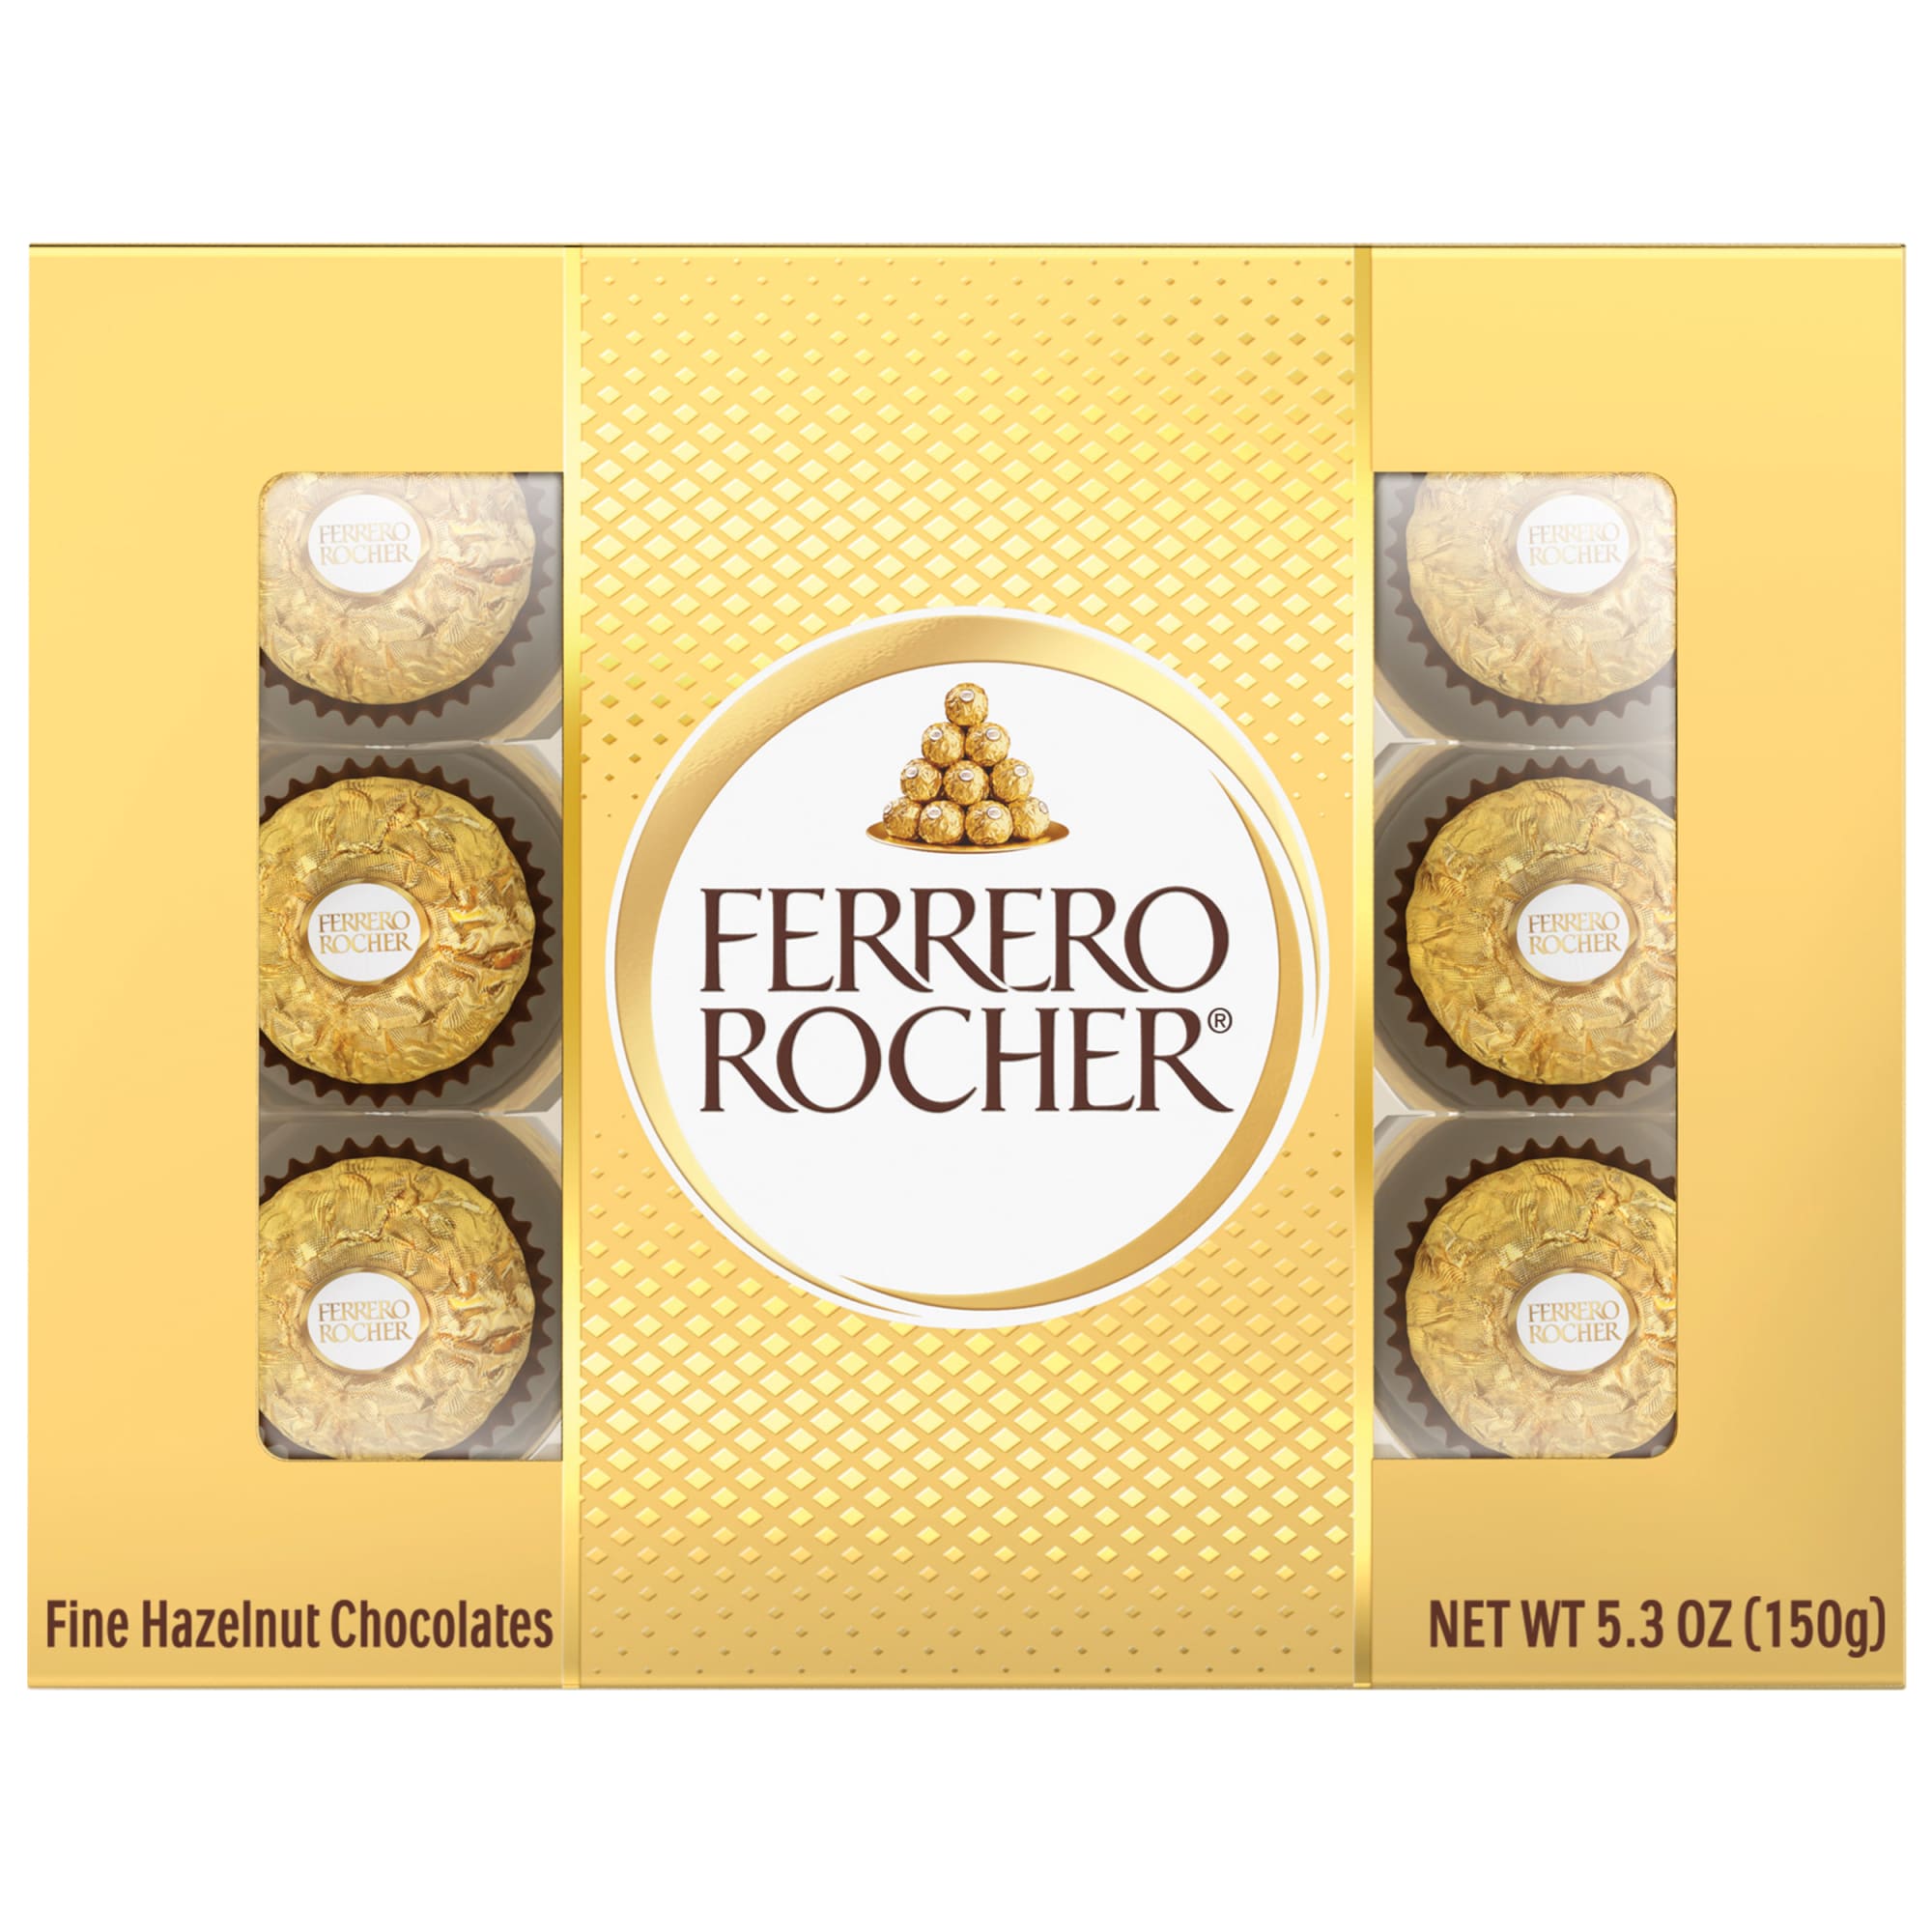 Ferrero Rocher Premium Gourmet Milk Chocolate Hazelnut, Chocolates for Gifting, 12 Count - image 1 of 8